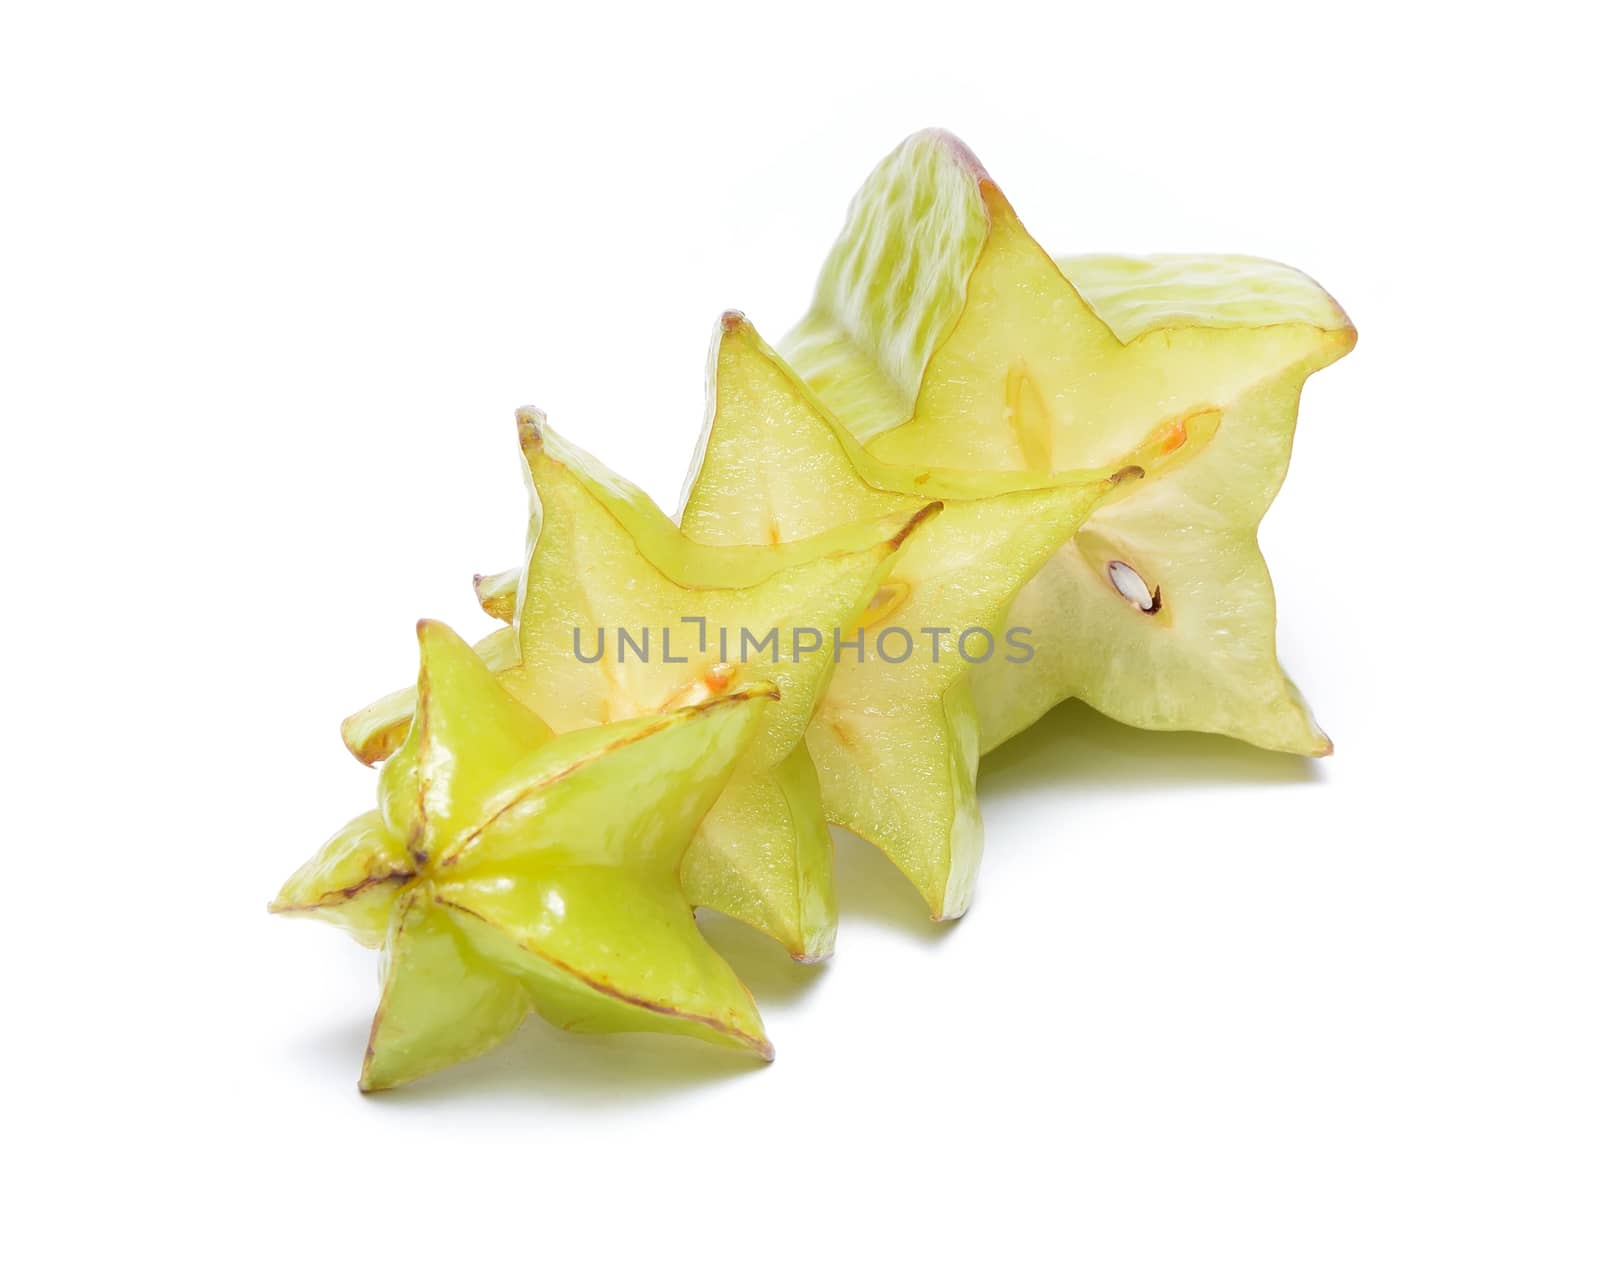 Unripped star fruit - carambola isolated on white background